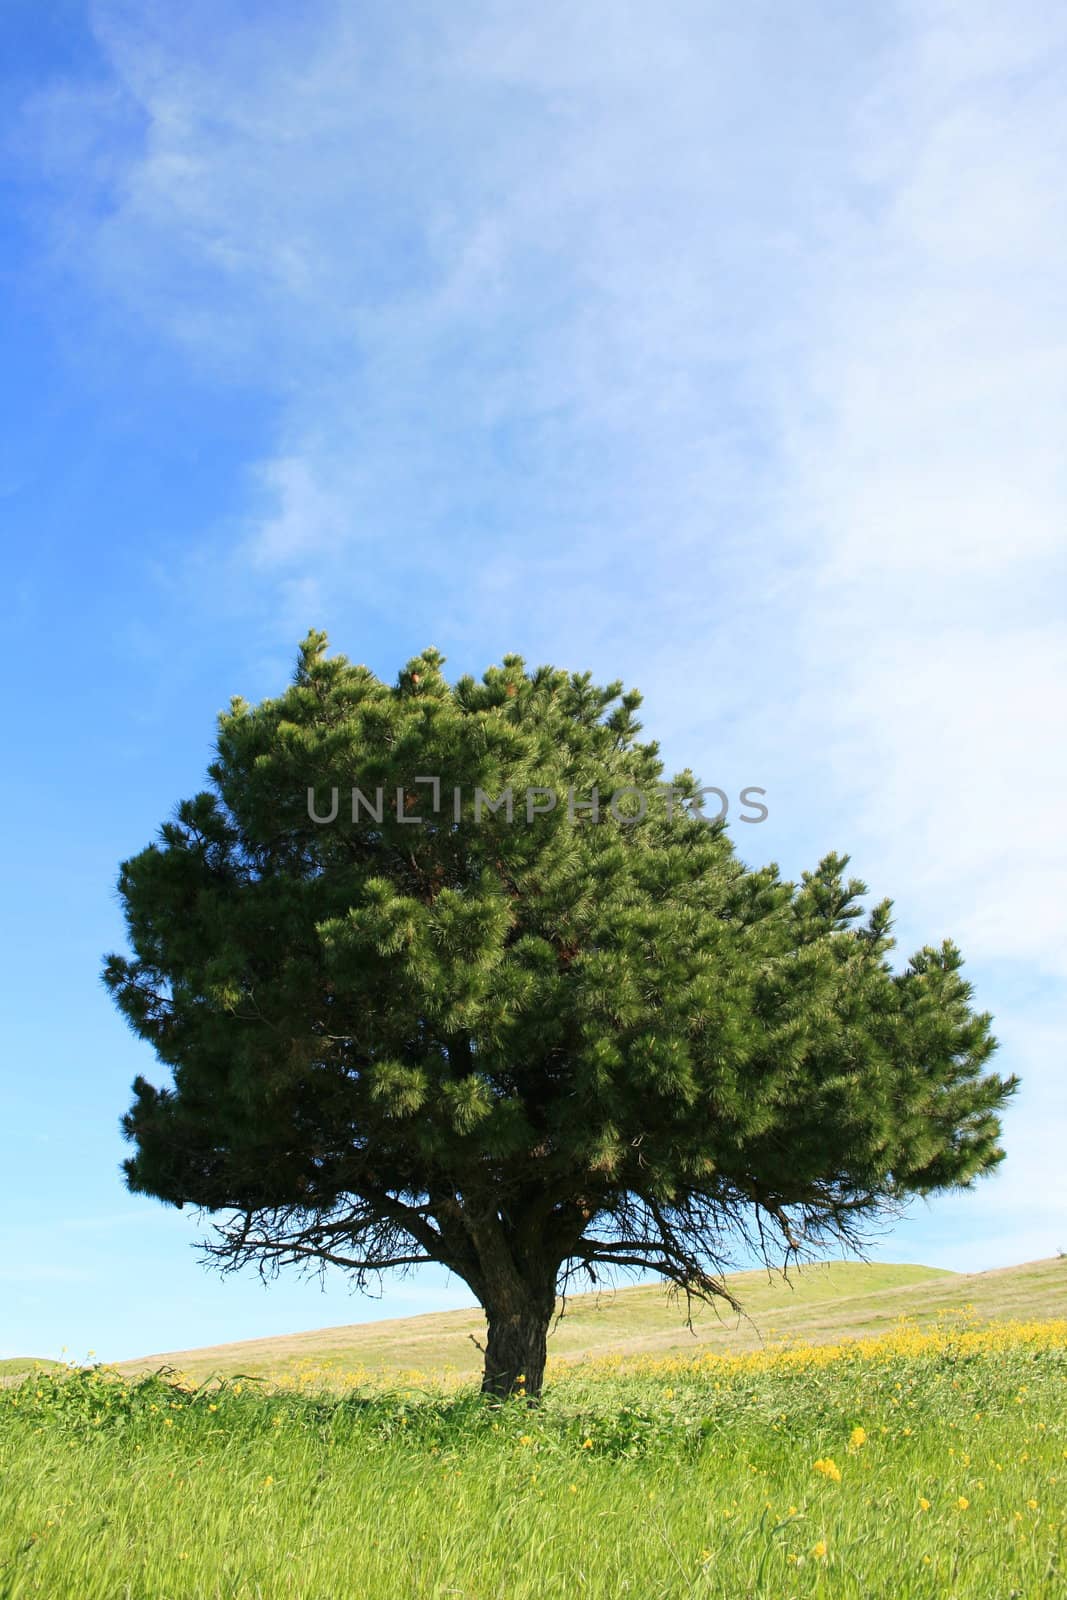 Single Tree by MichaelFelix